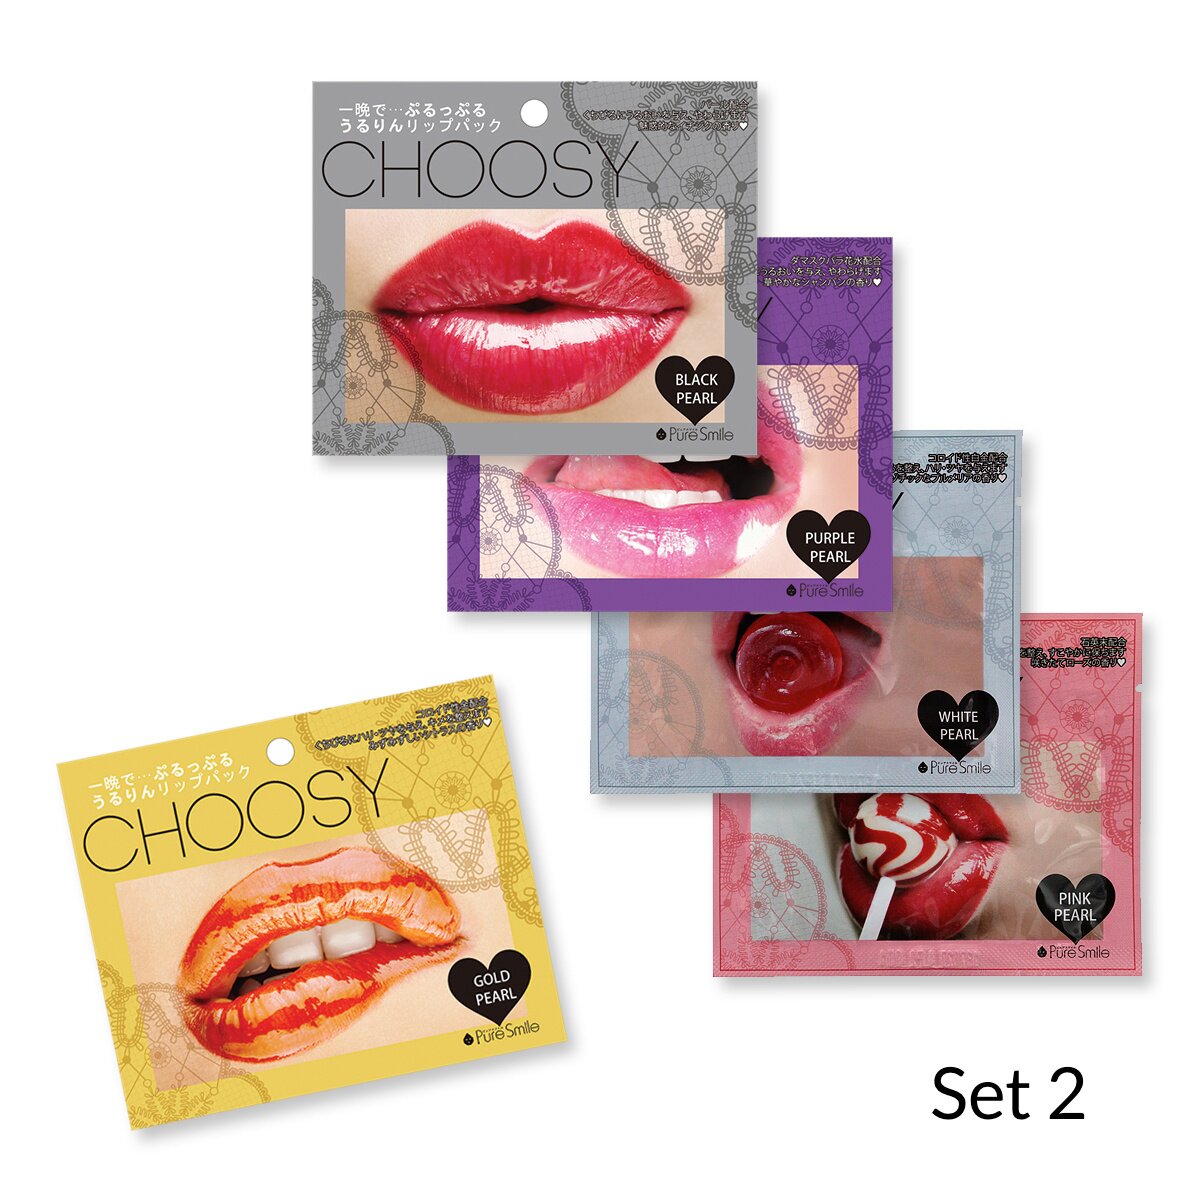 choosy lip mask package translation